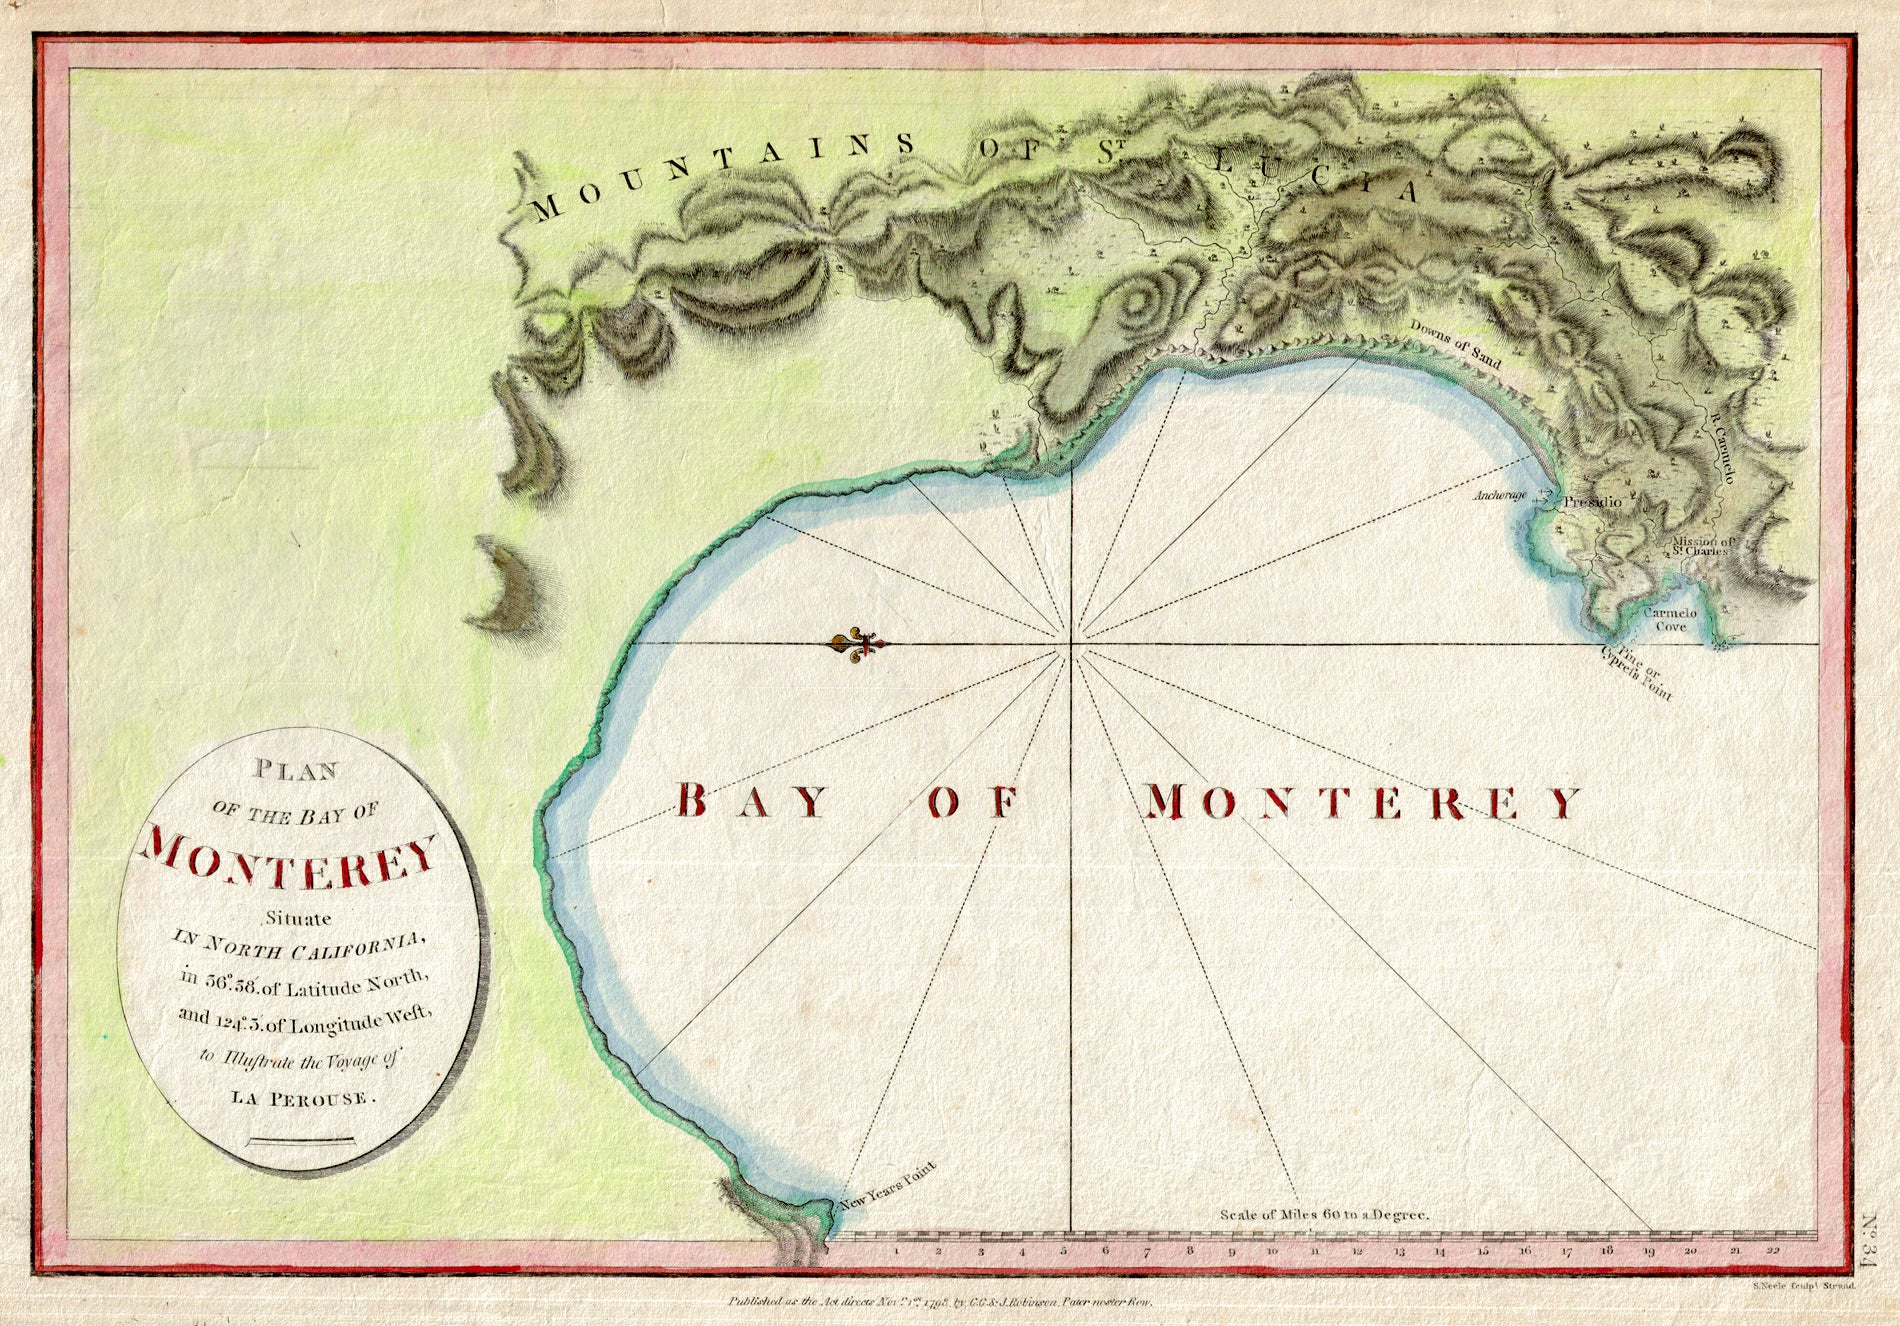 (CA - Monterey) Plan of the Bay of Monterey